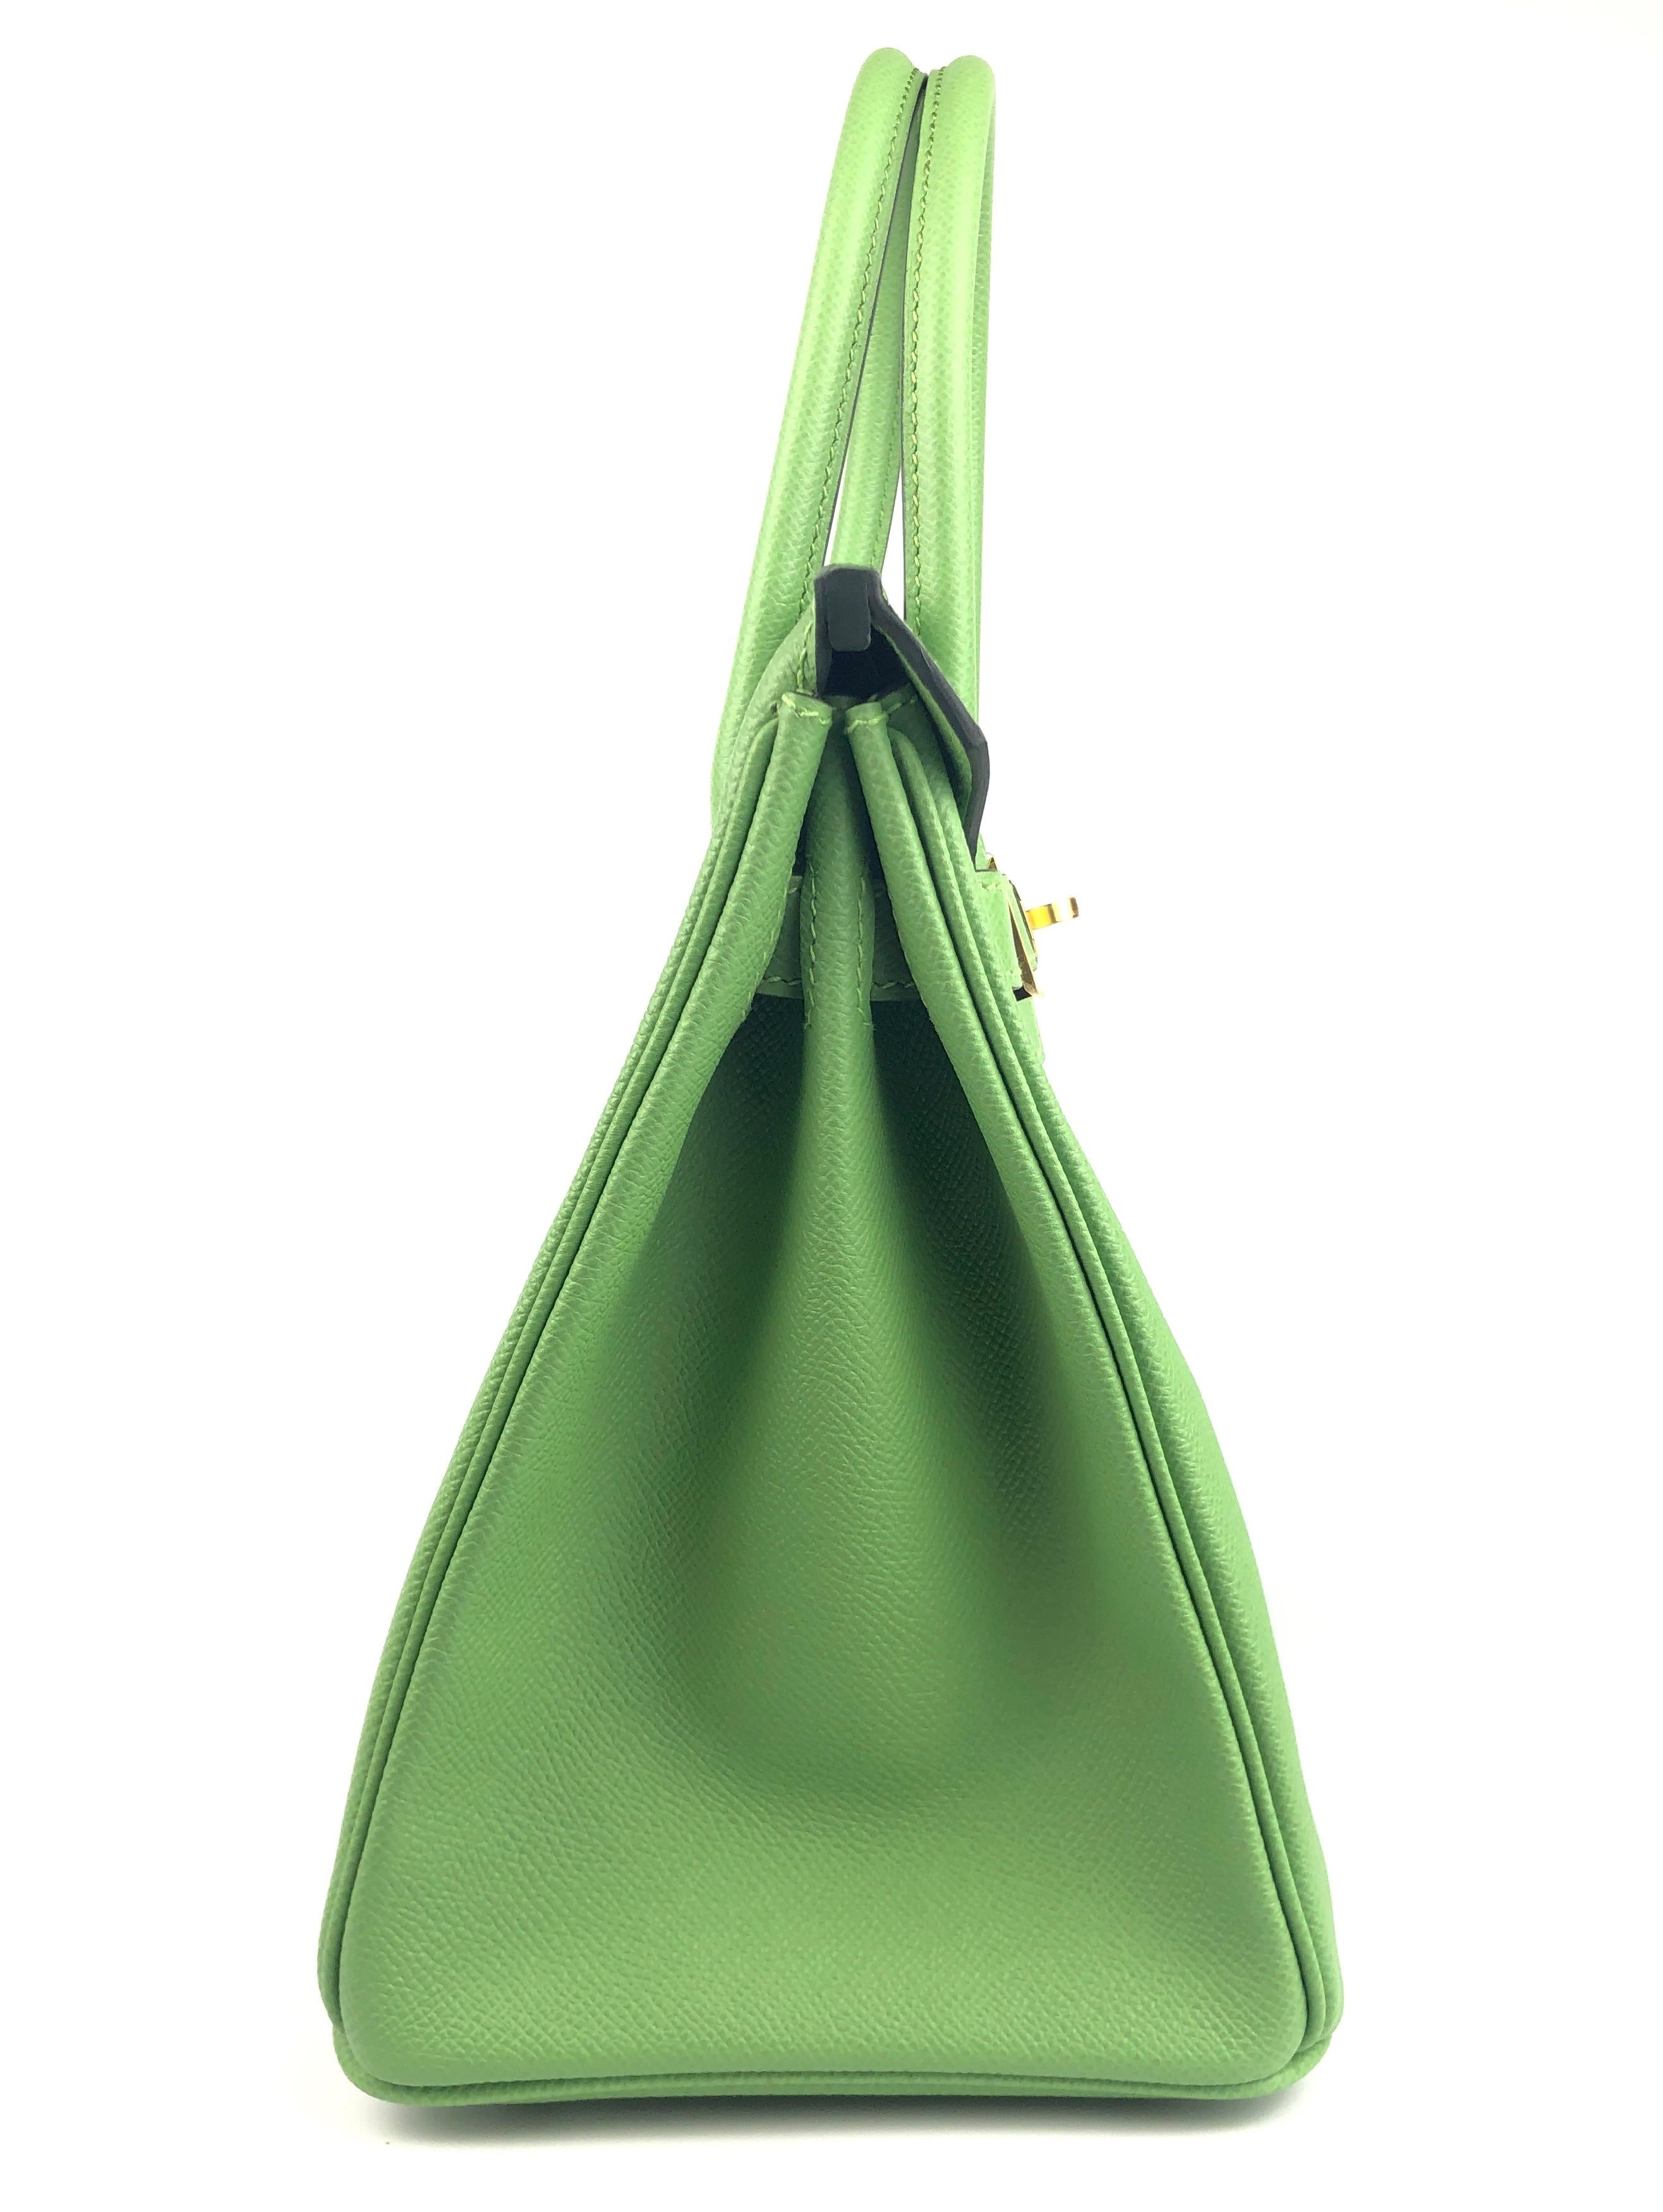 Hermes Birkin 30 Vert Criquet Green Epsom Leather Handbag Gold Hardware 2020 2